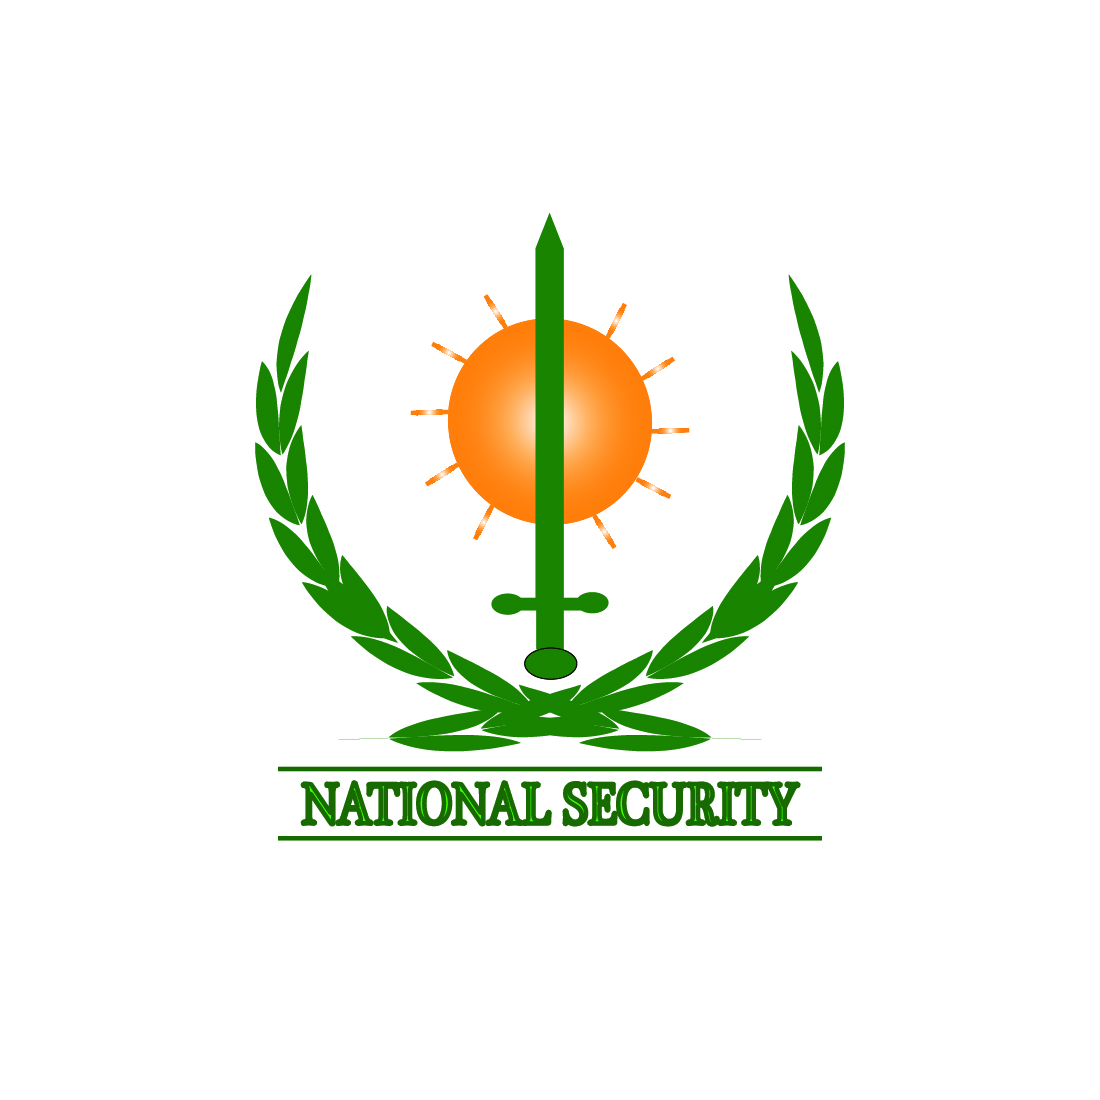 National Security main image.